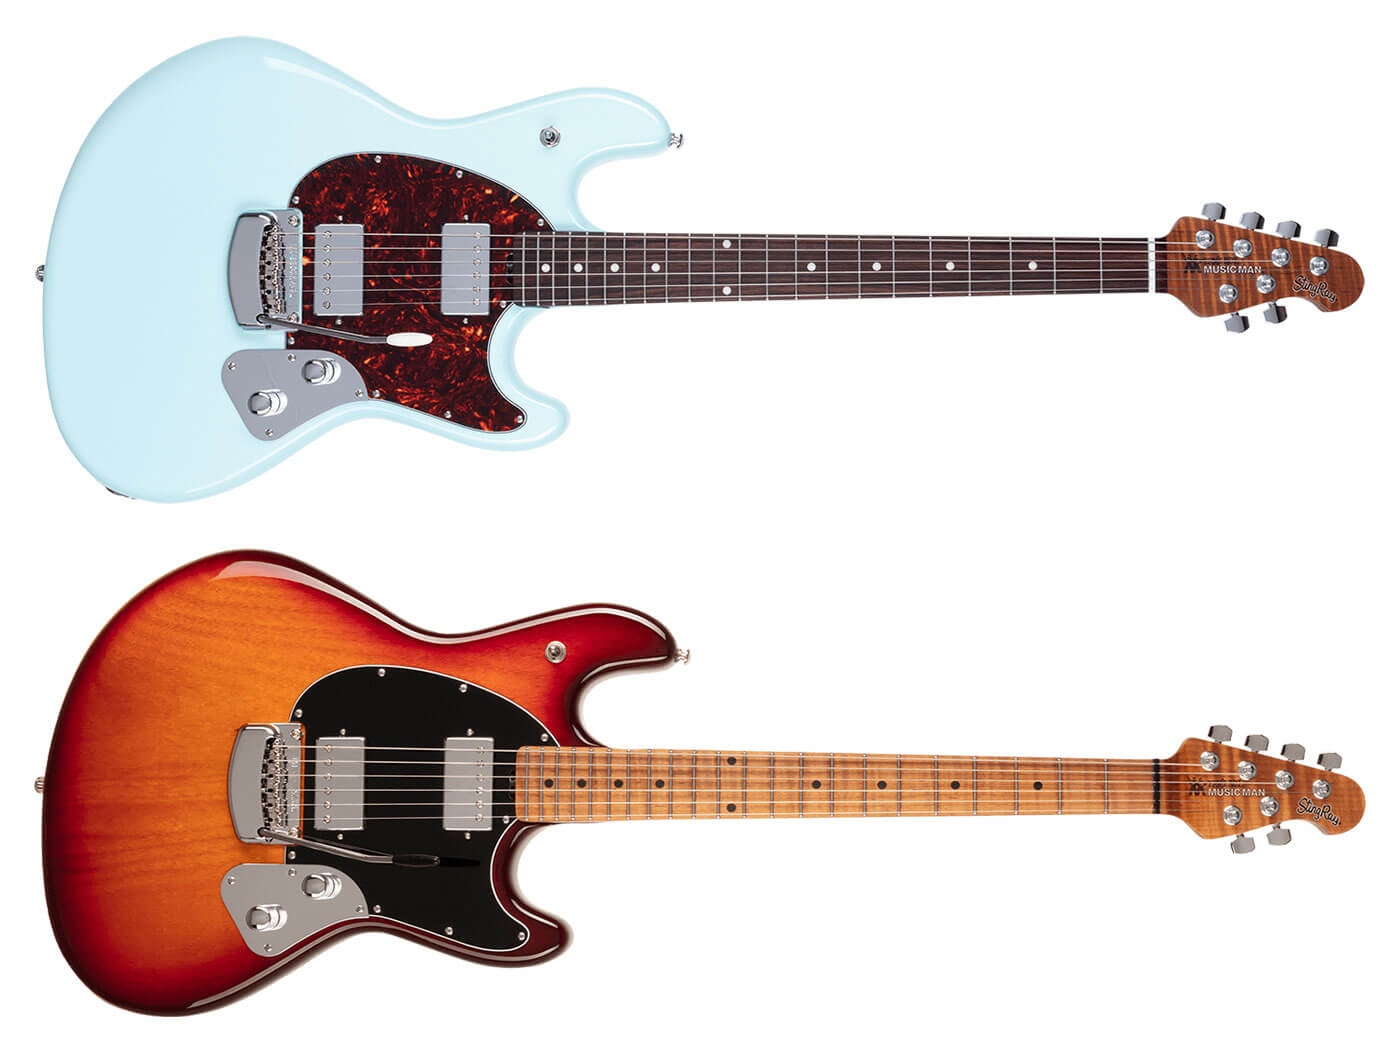 EBMM new Stingray Guitars